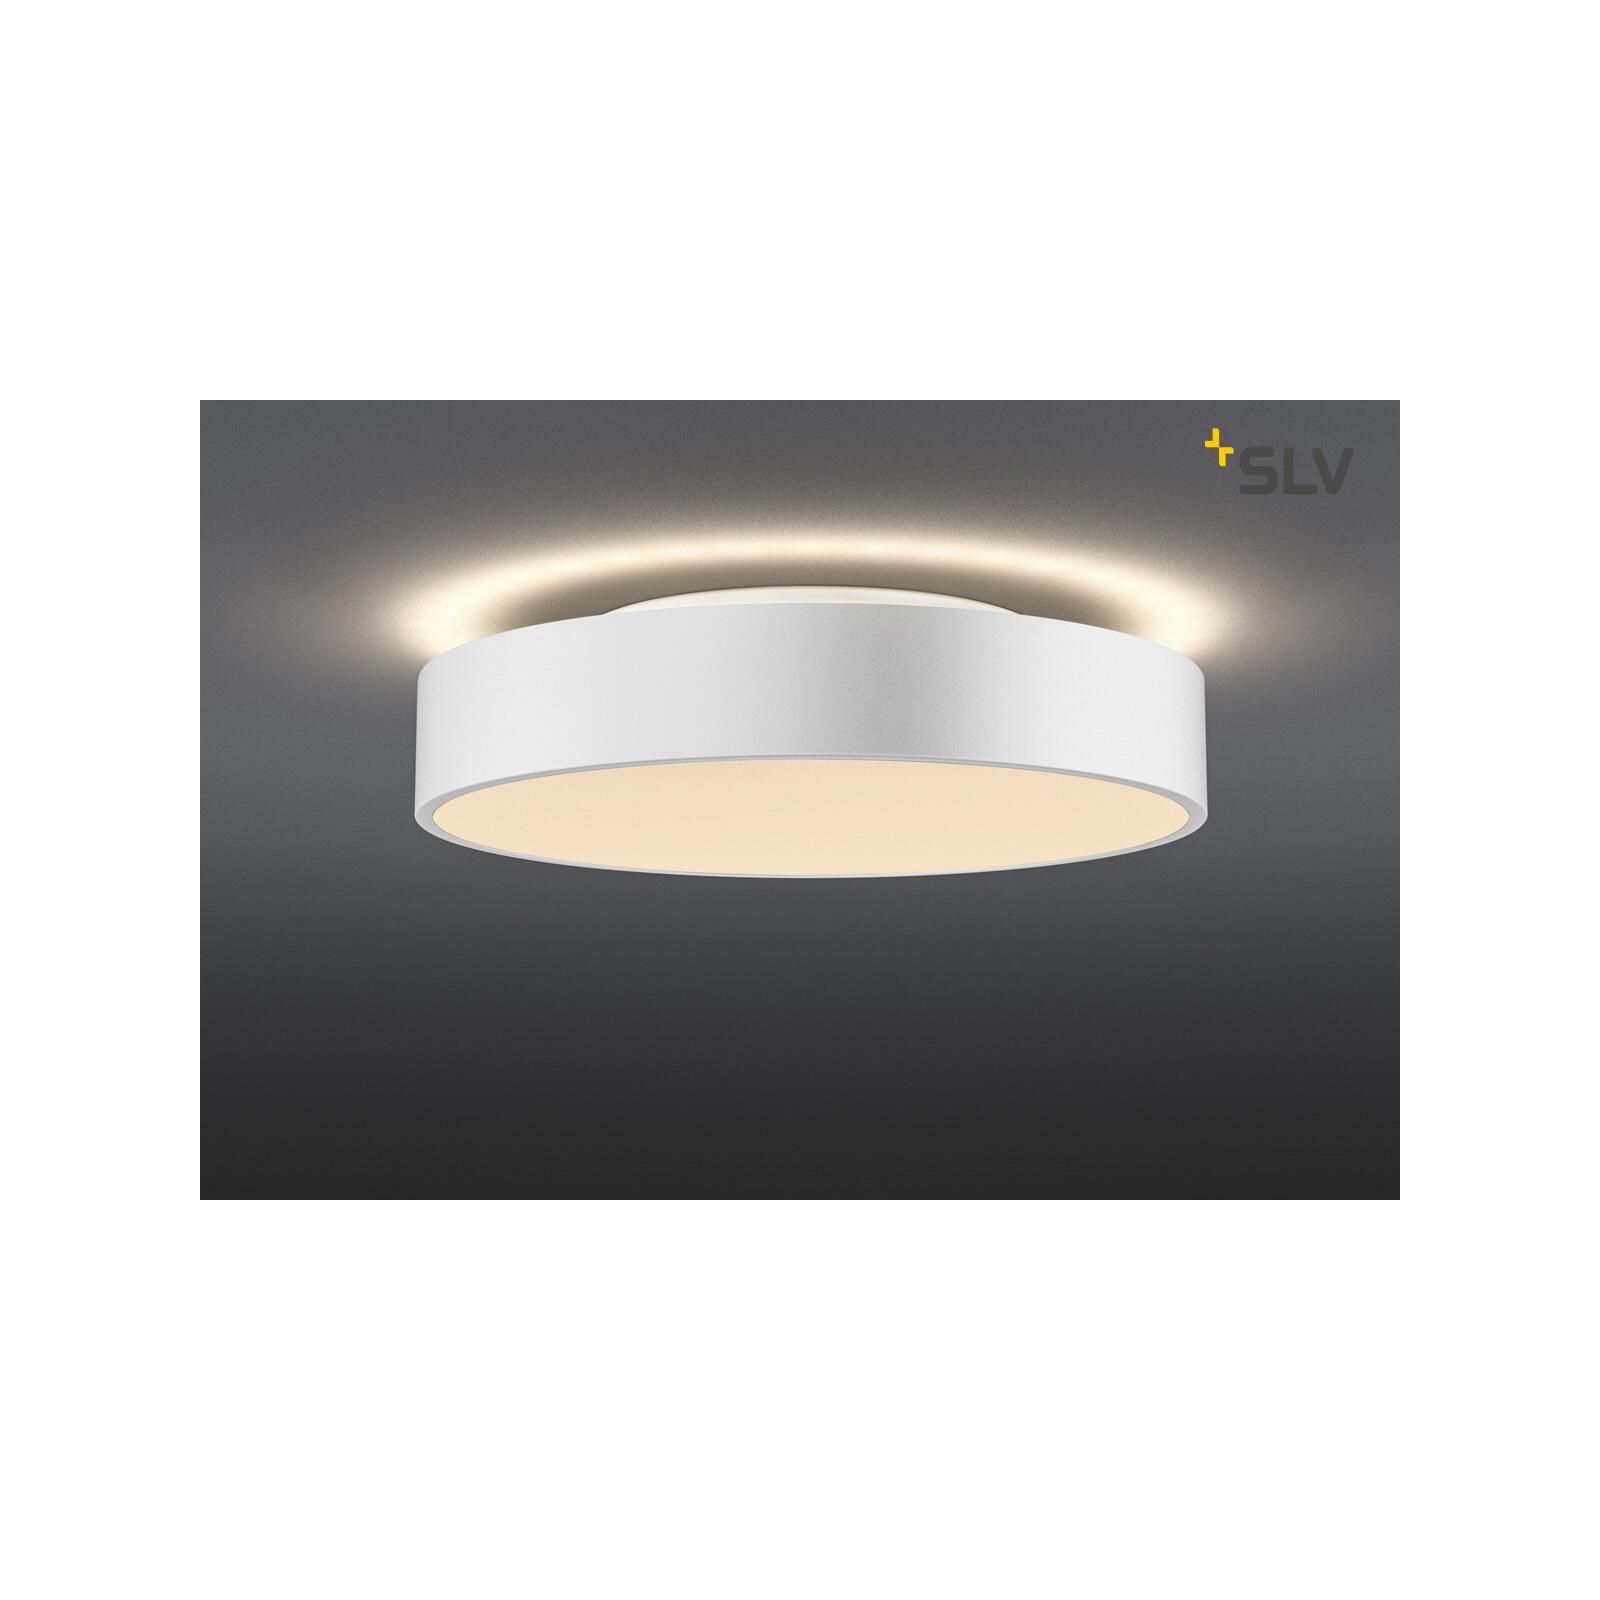 Medo 40 CW Deckenleuchte Effekt - LED Lampen & dimmbar DALI Corona Leuchten Onlineshop 3000/4000K